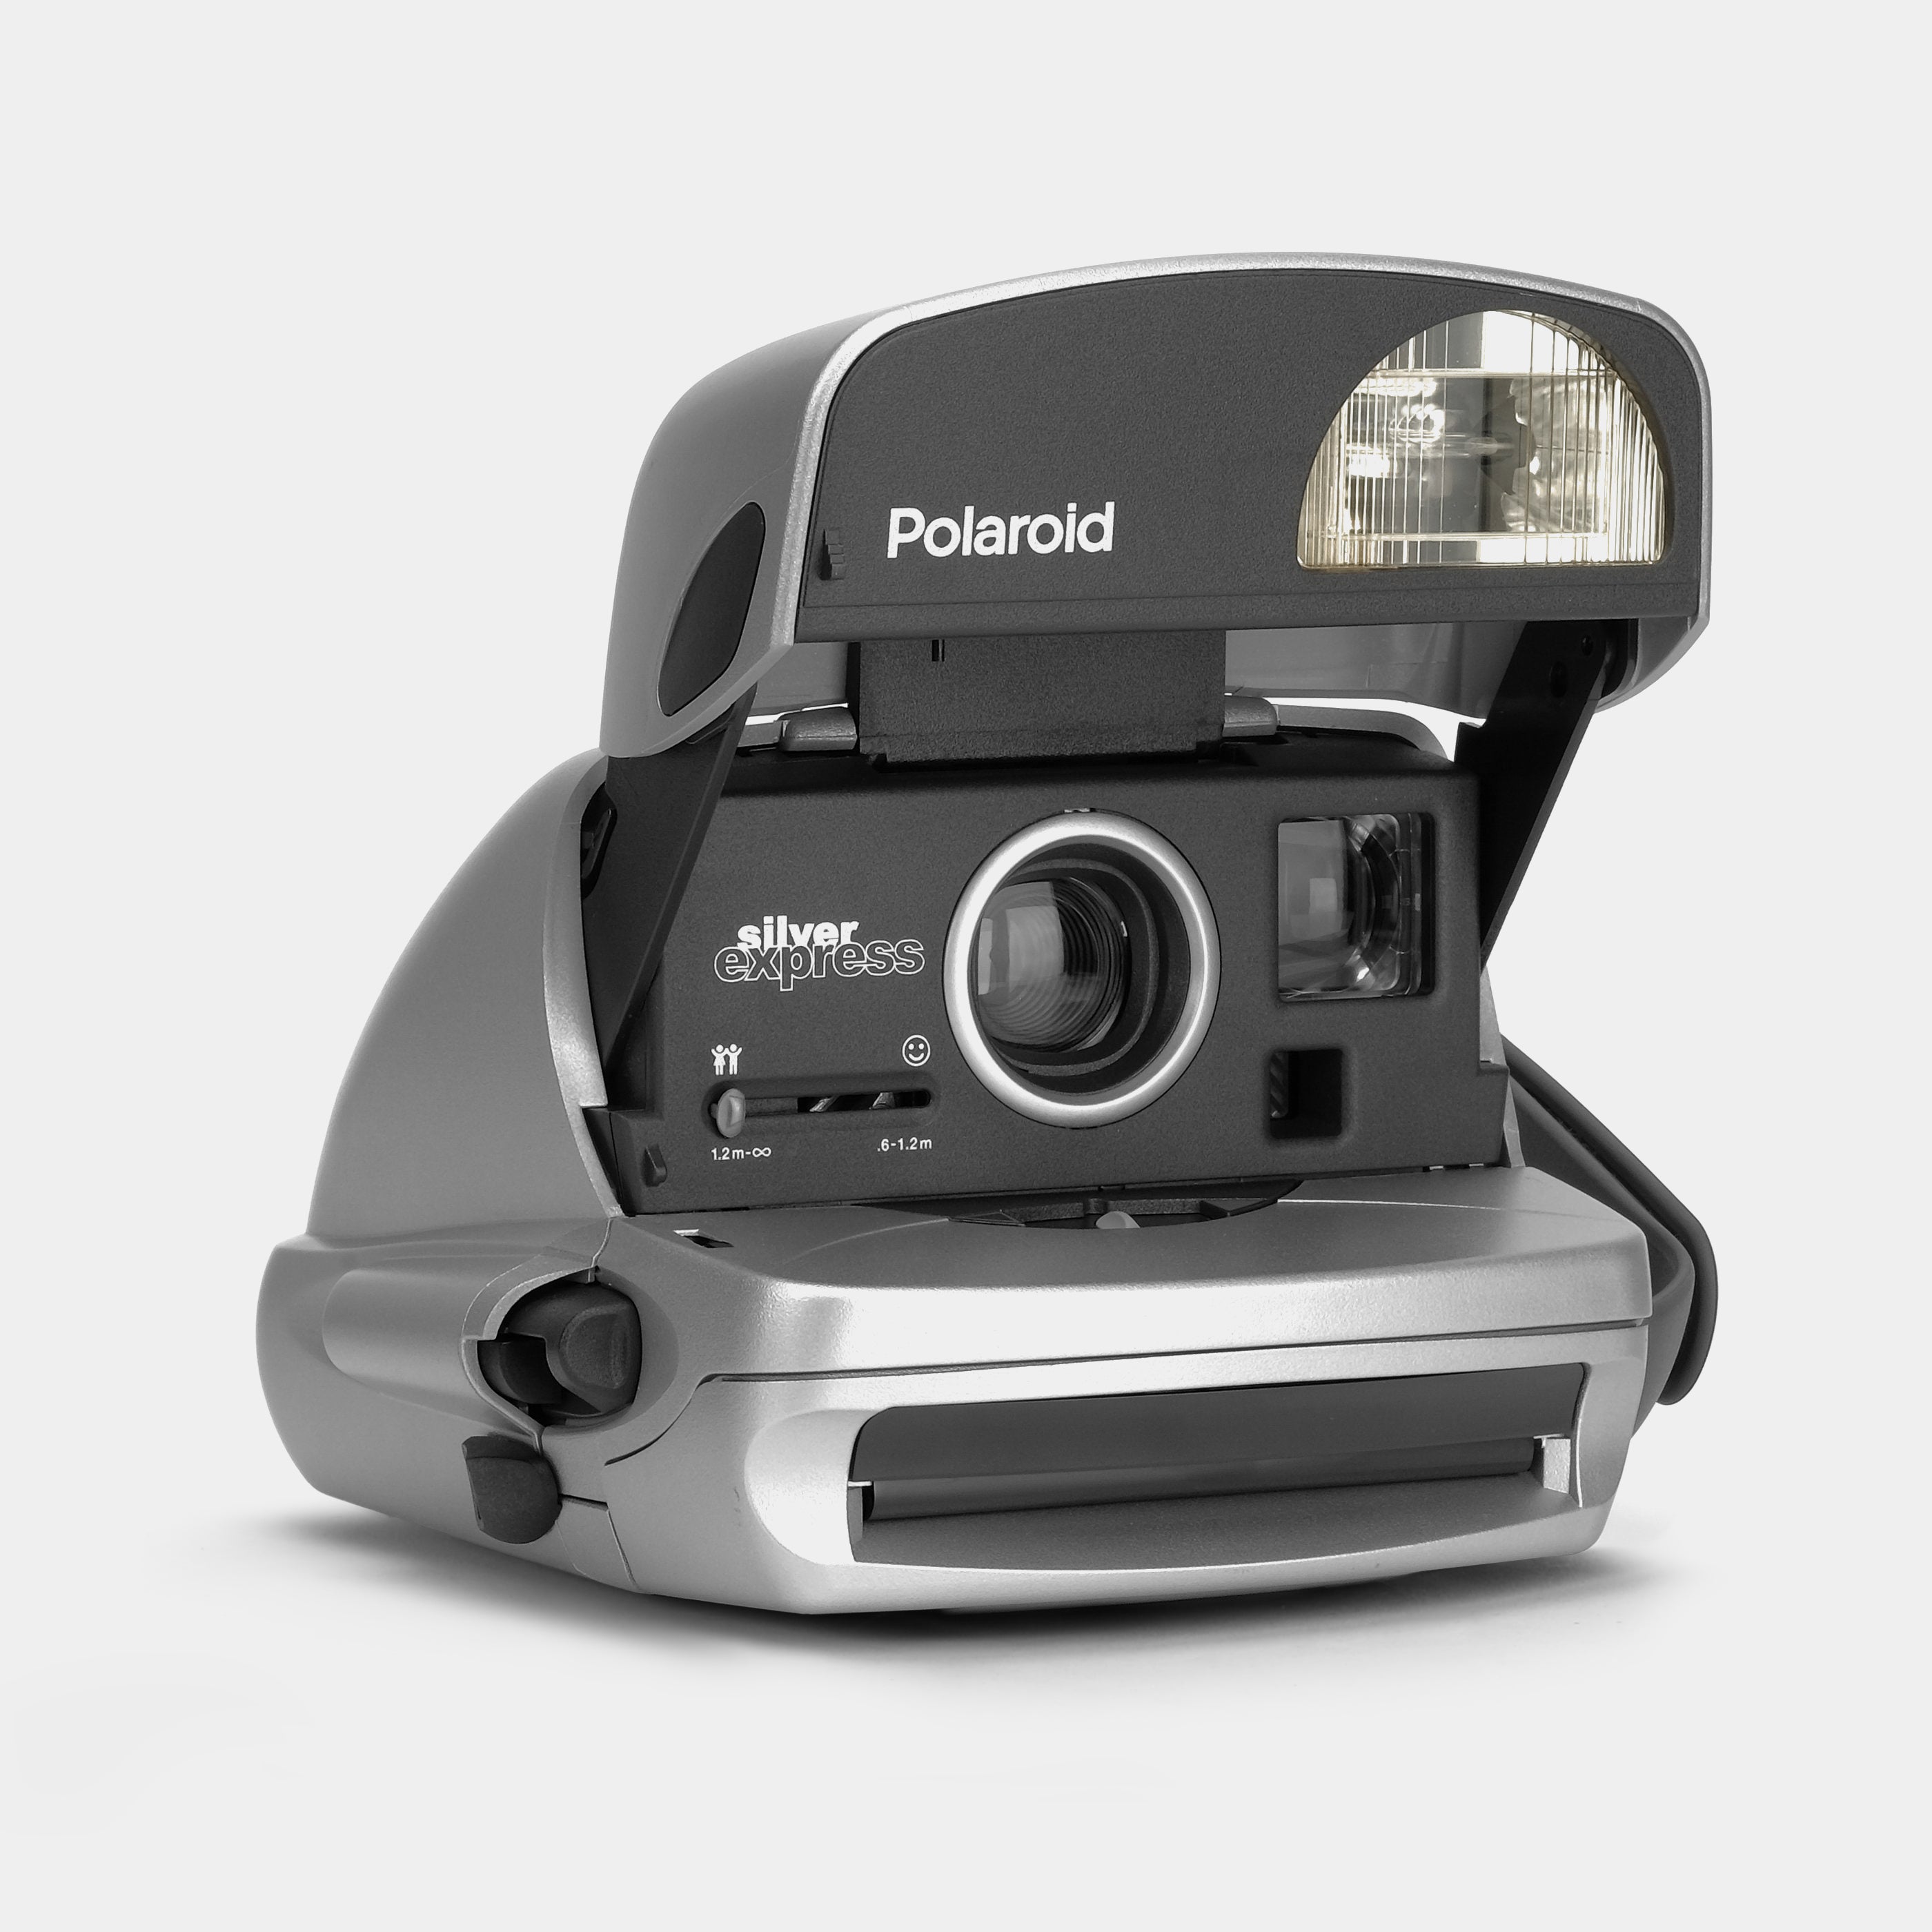 Polaroid 600 Express Silver and Black Instant Film Camera